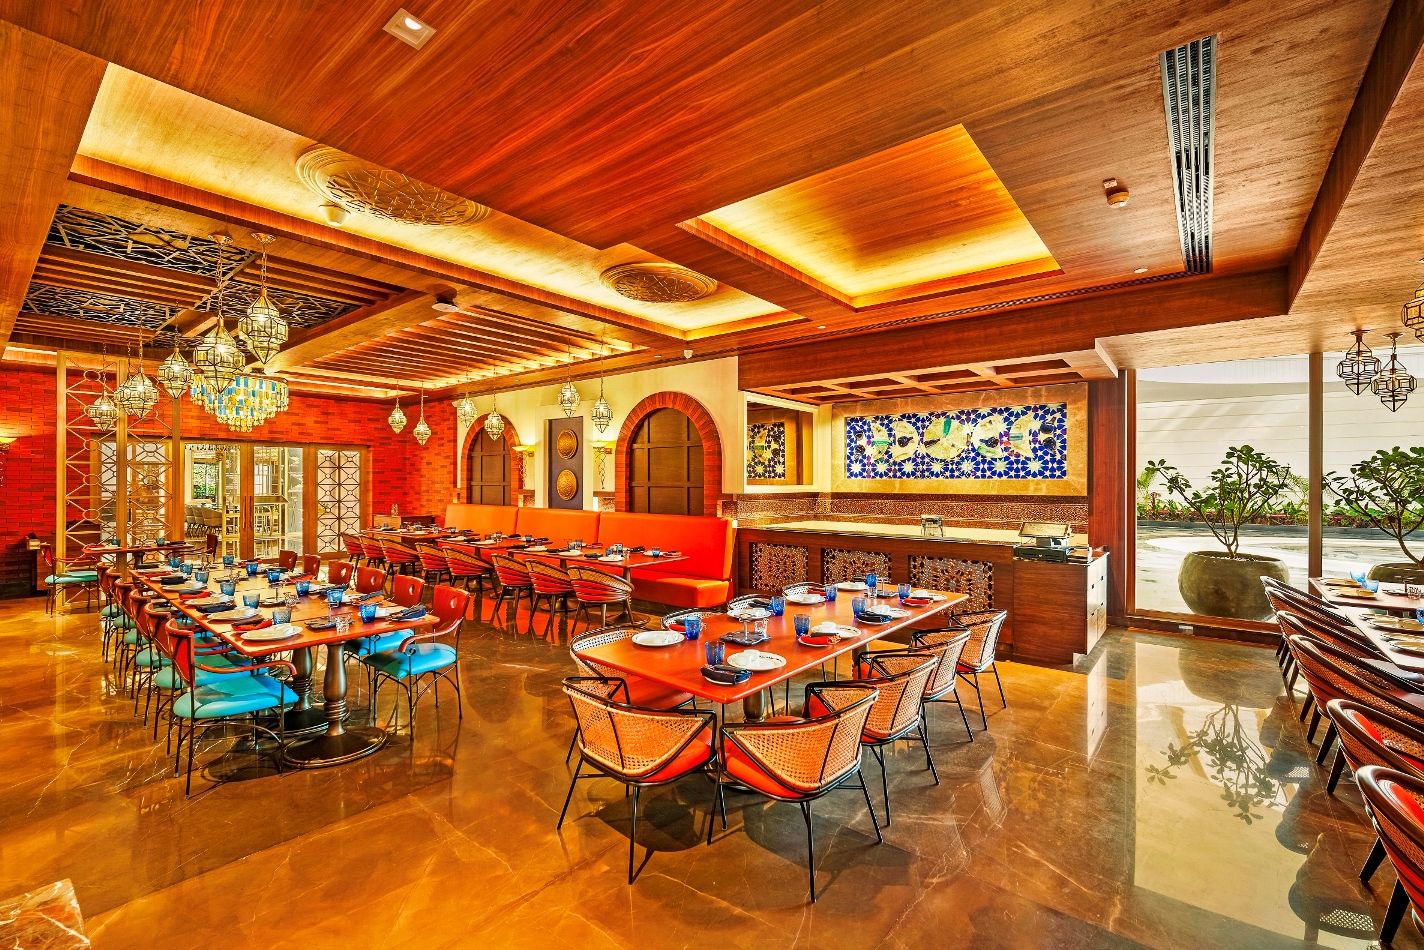 Radisson Blu Hotel GRT Chennai Celebrates 25 years of ‘The Great Kabab Factory’